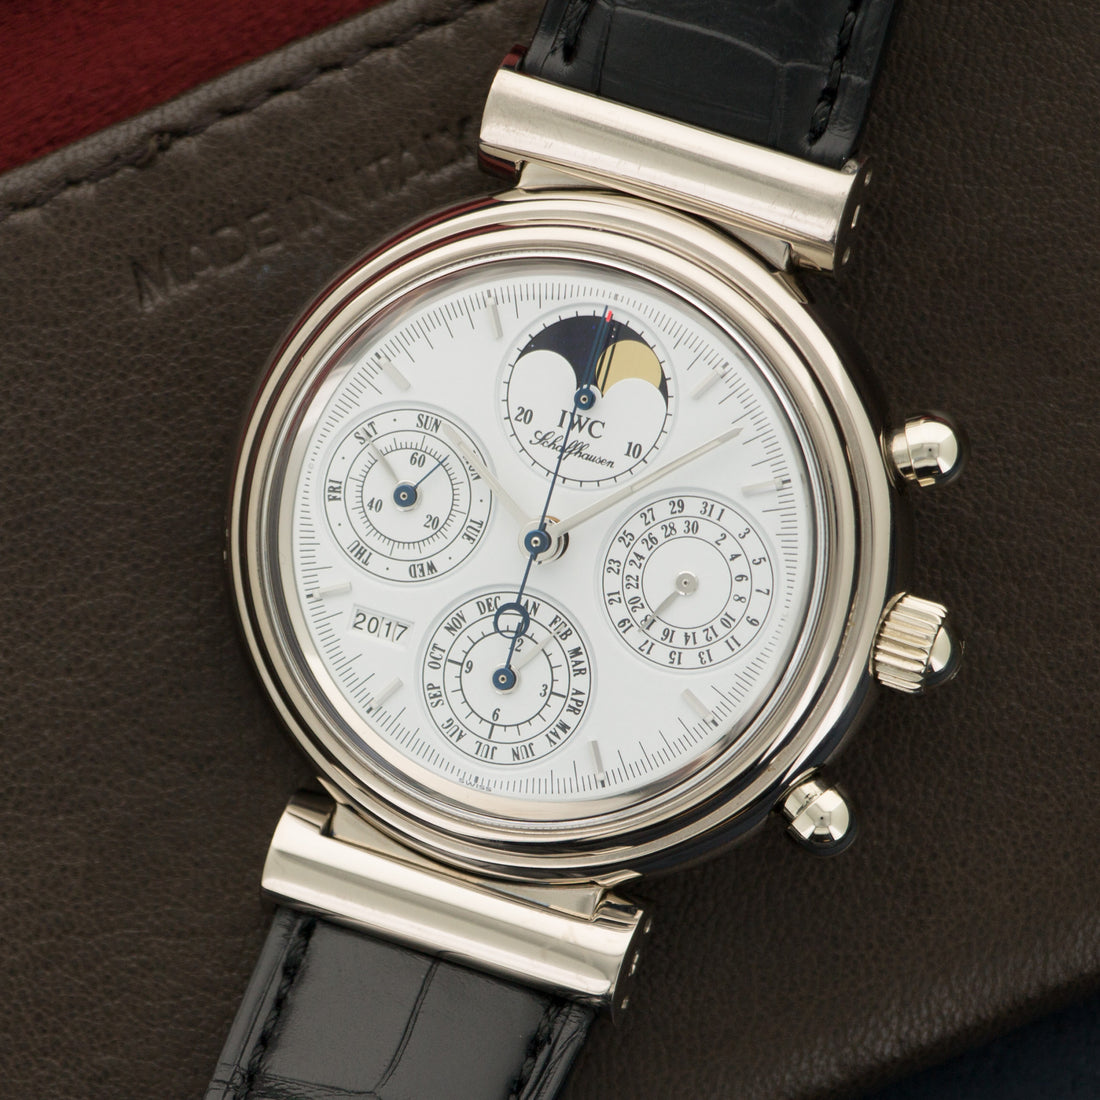 IWC White Gold Da Vinci Perpetual Calendar Chronograph Watch